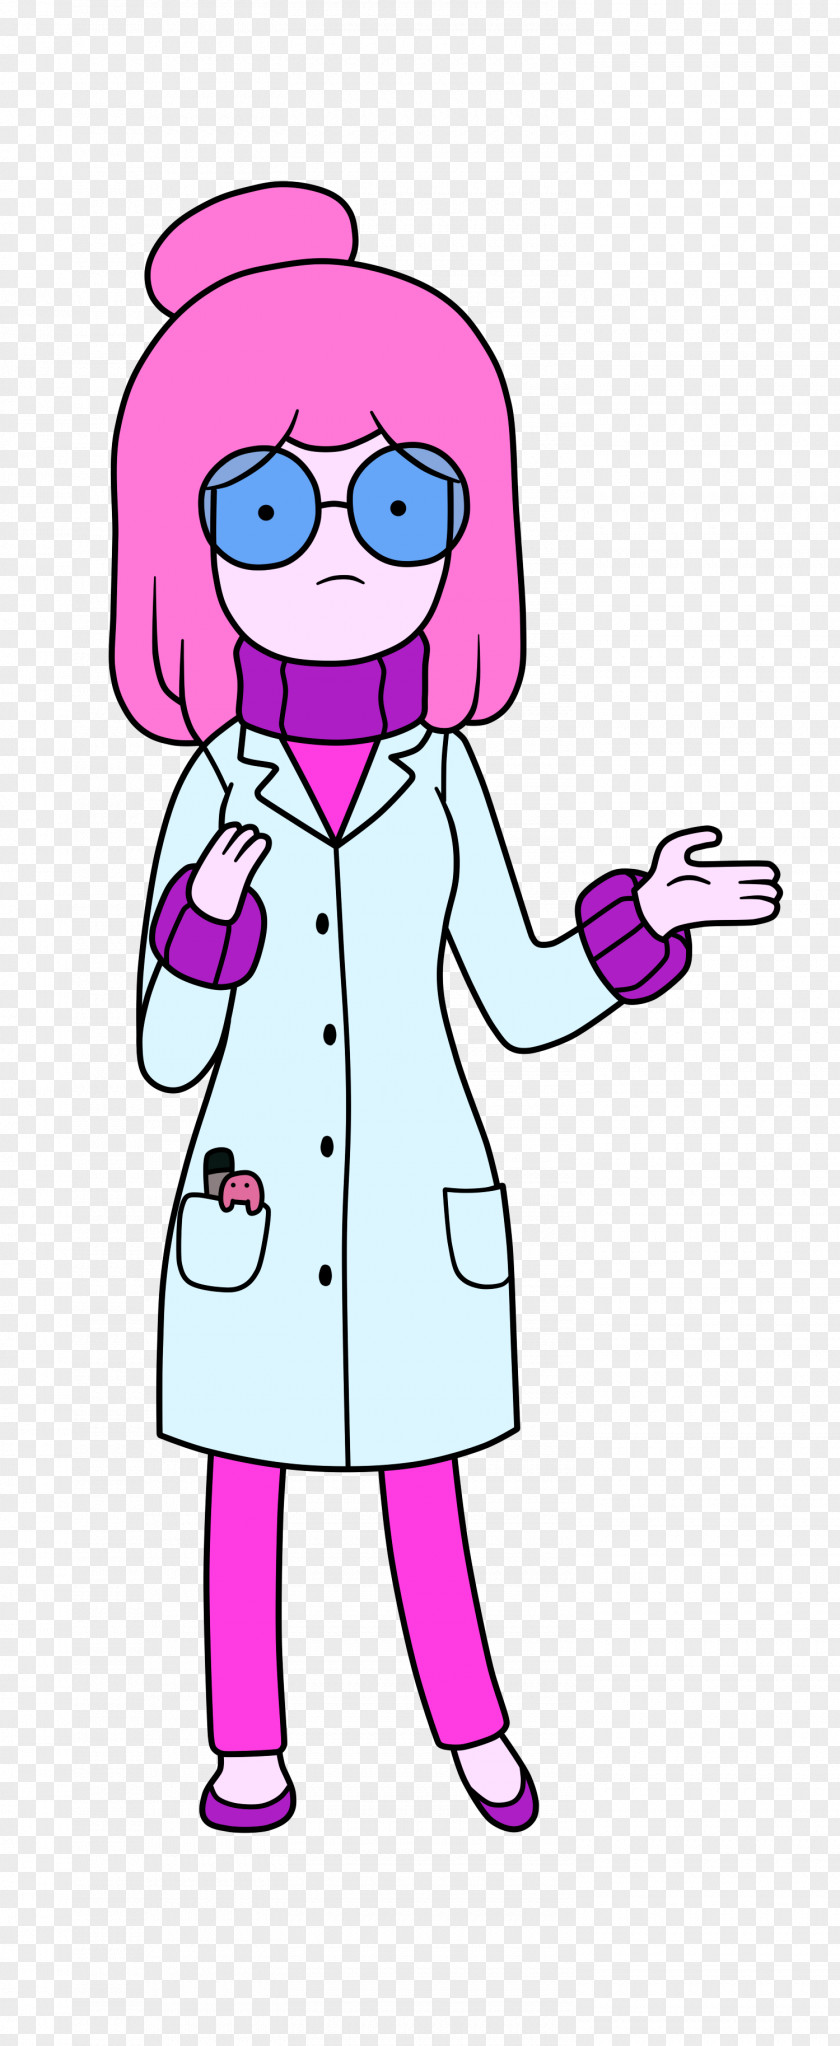 Adventure Time Princess Bubblegum Slumber Party Panic Laboratory Lab Coats PNG